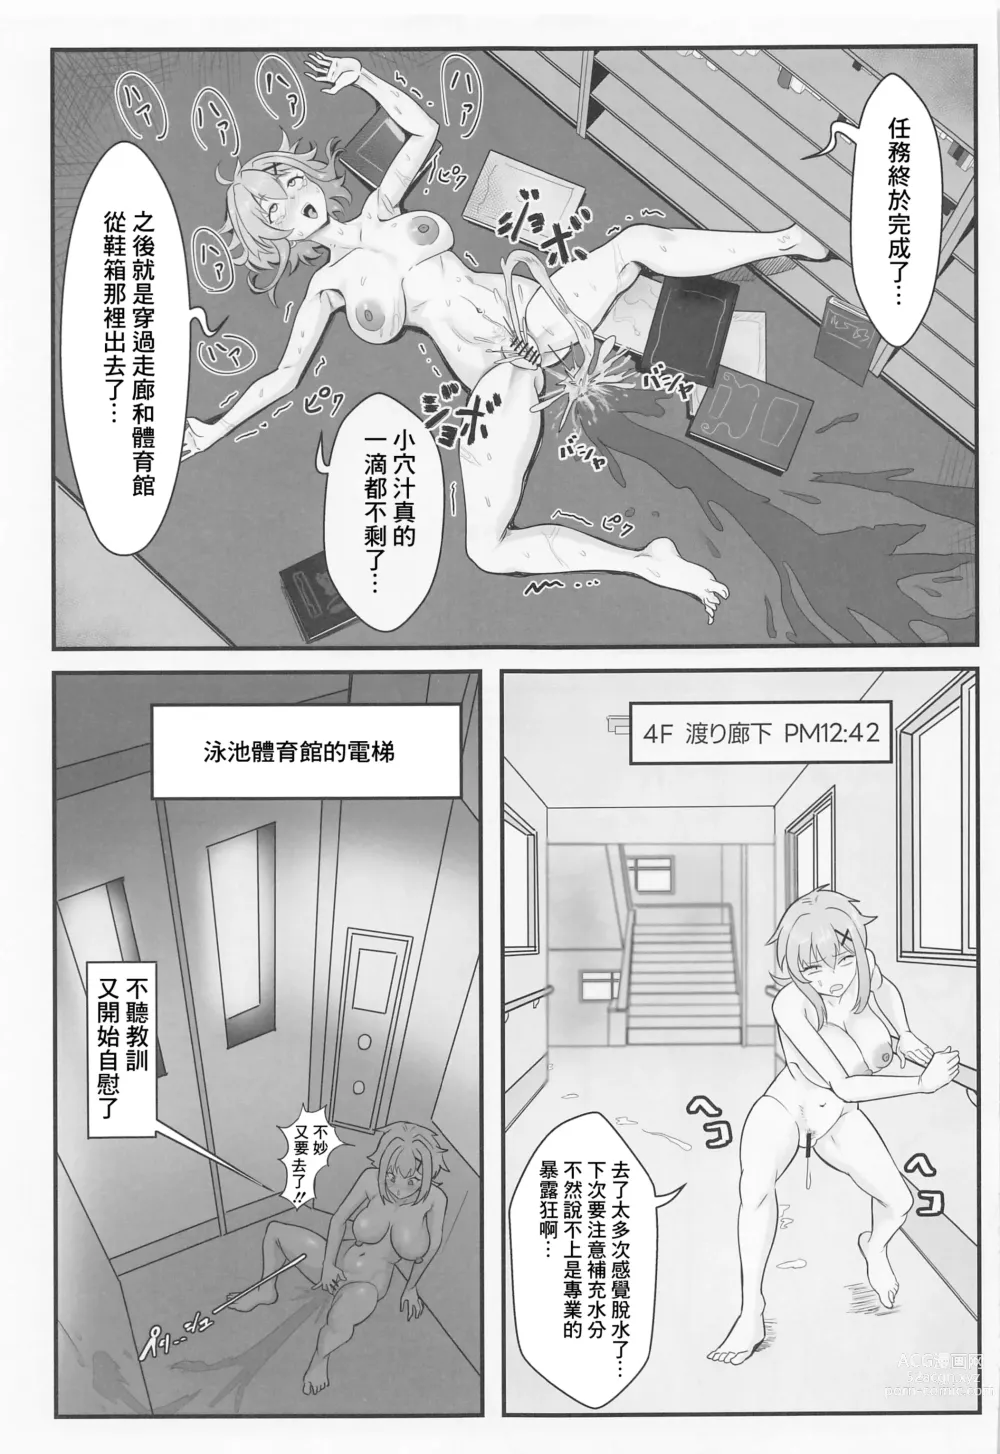 Page 30 of doujinshi Kiri-chan no Danshikounai Roshutsu Haikai Quest